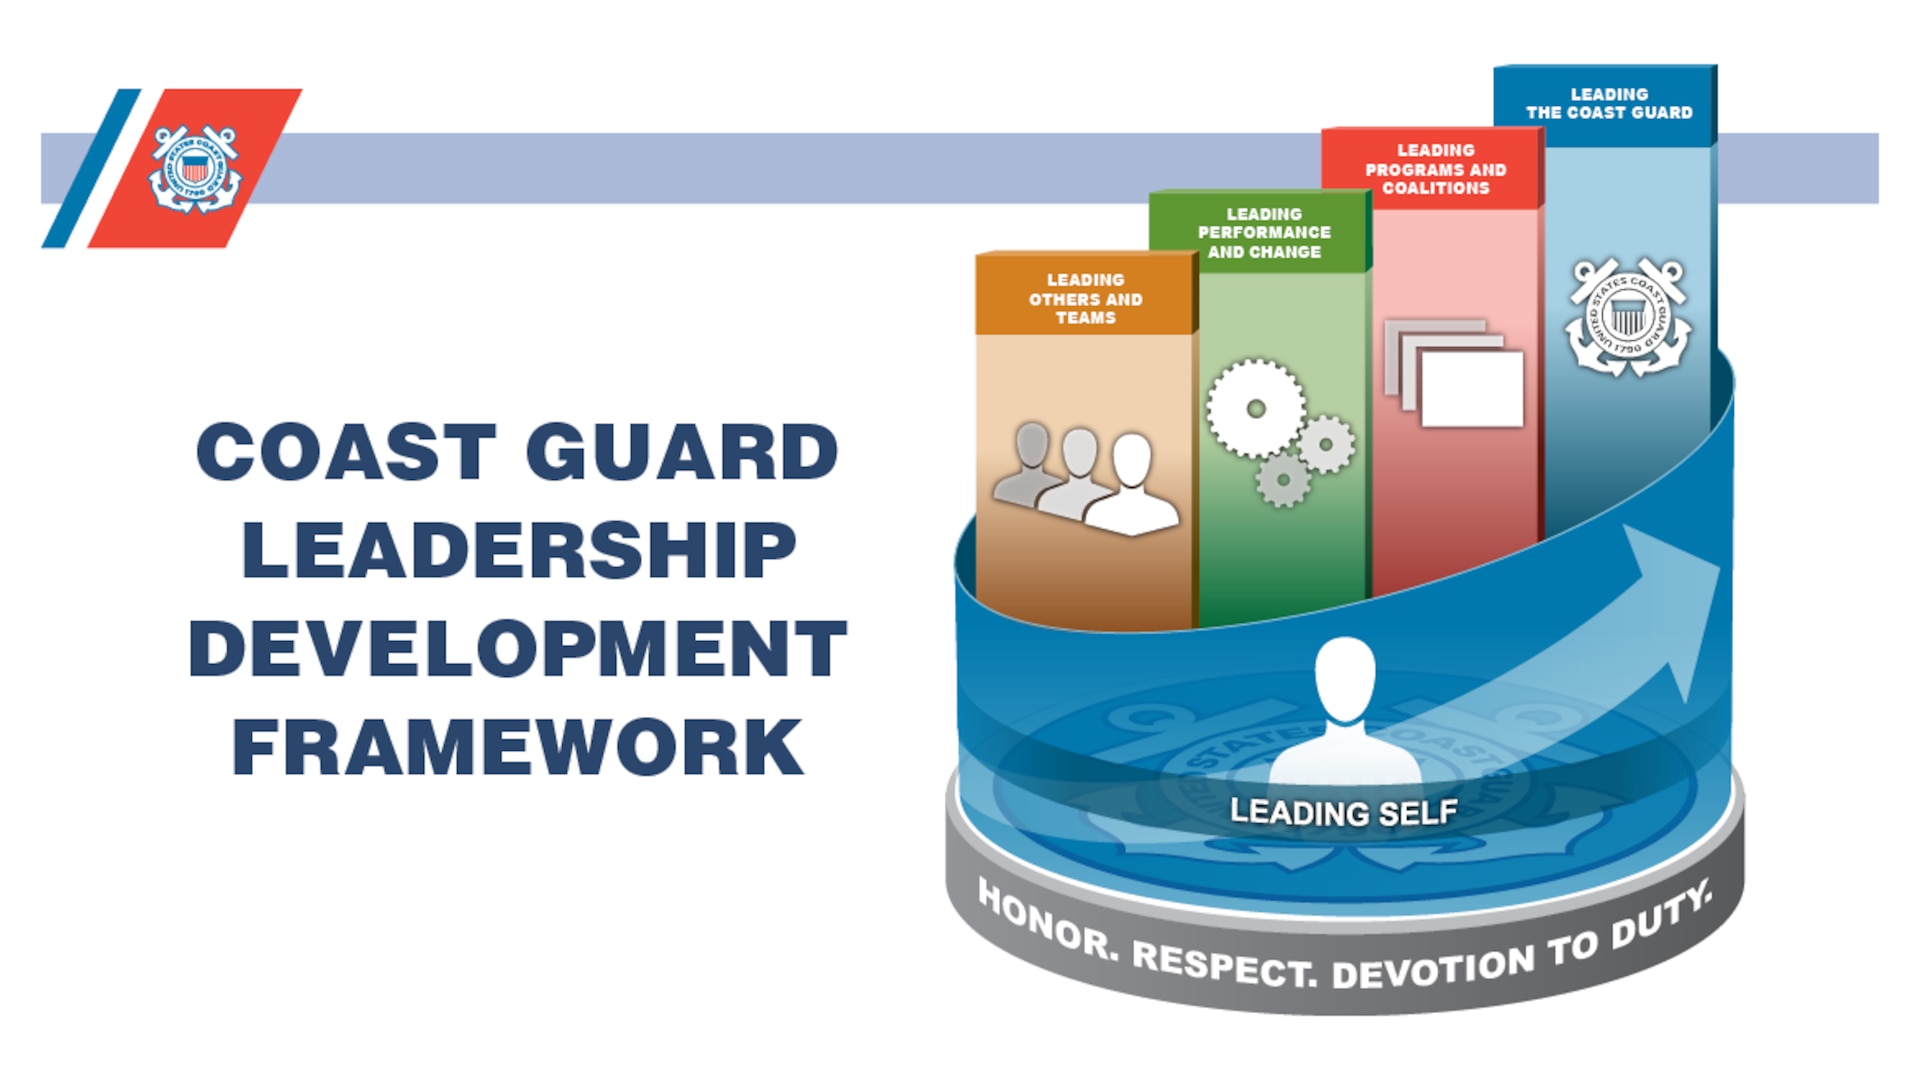 Updates to the Coast Guard Leadership Development Framework